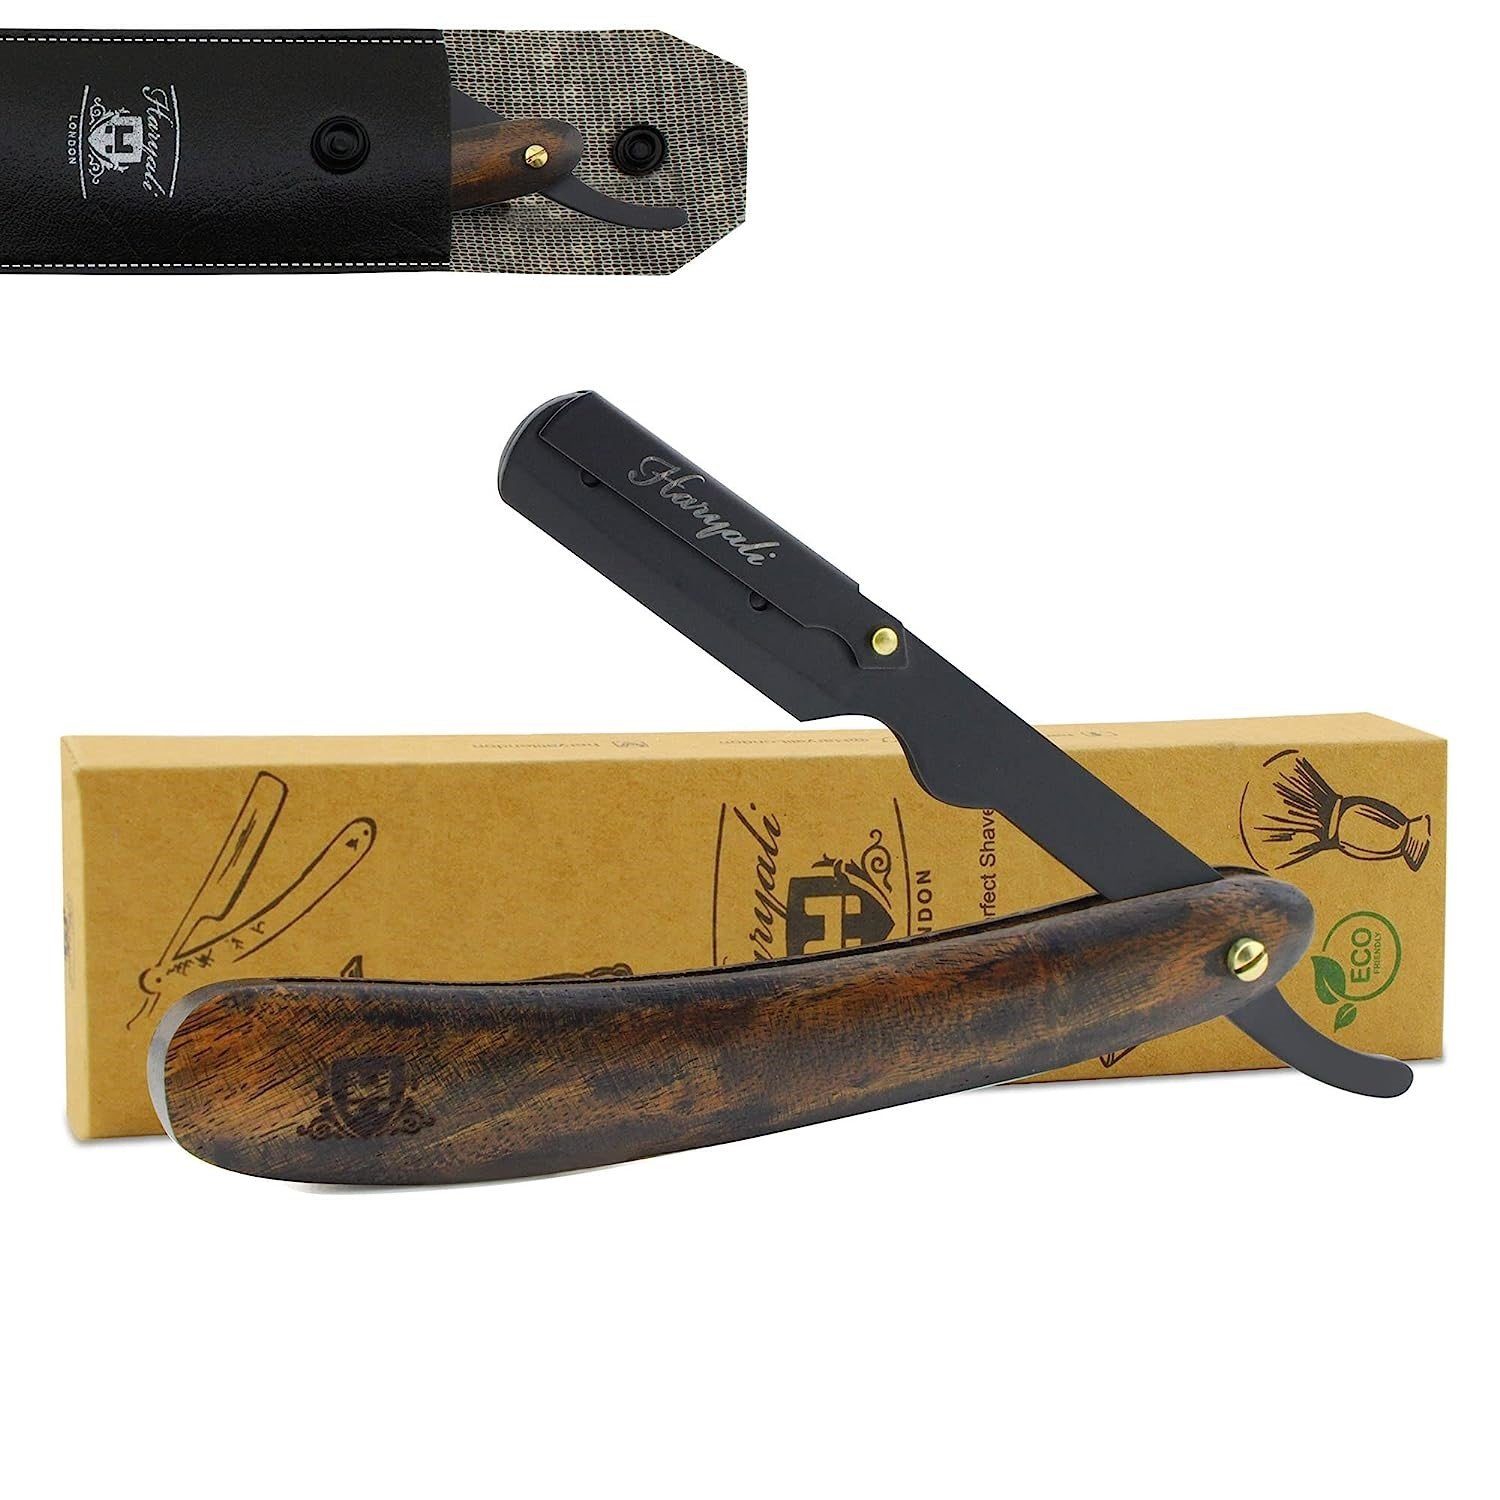 Wood Haryali Bartmesser London Nachhaltige Rasiermesser Haryali London mit Rasiermesser - Dark Holzgriff